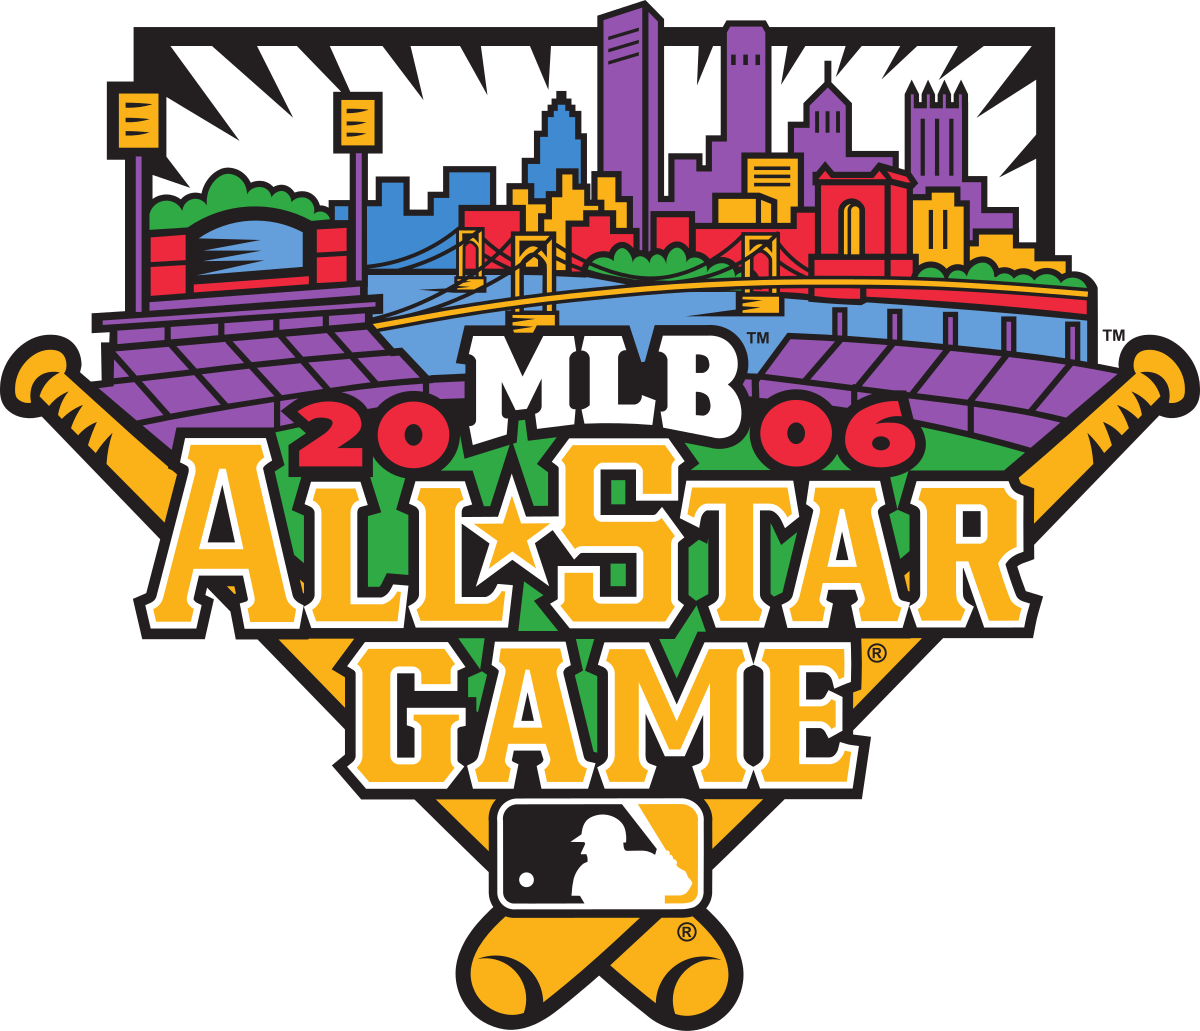 Major League Baseball All-Star Game - Wikipedia